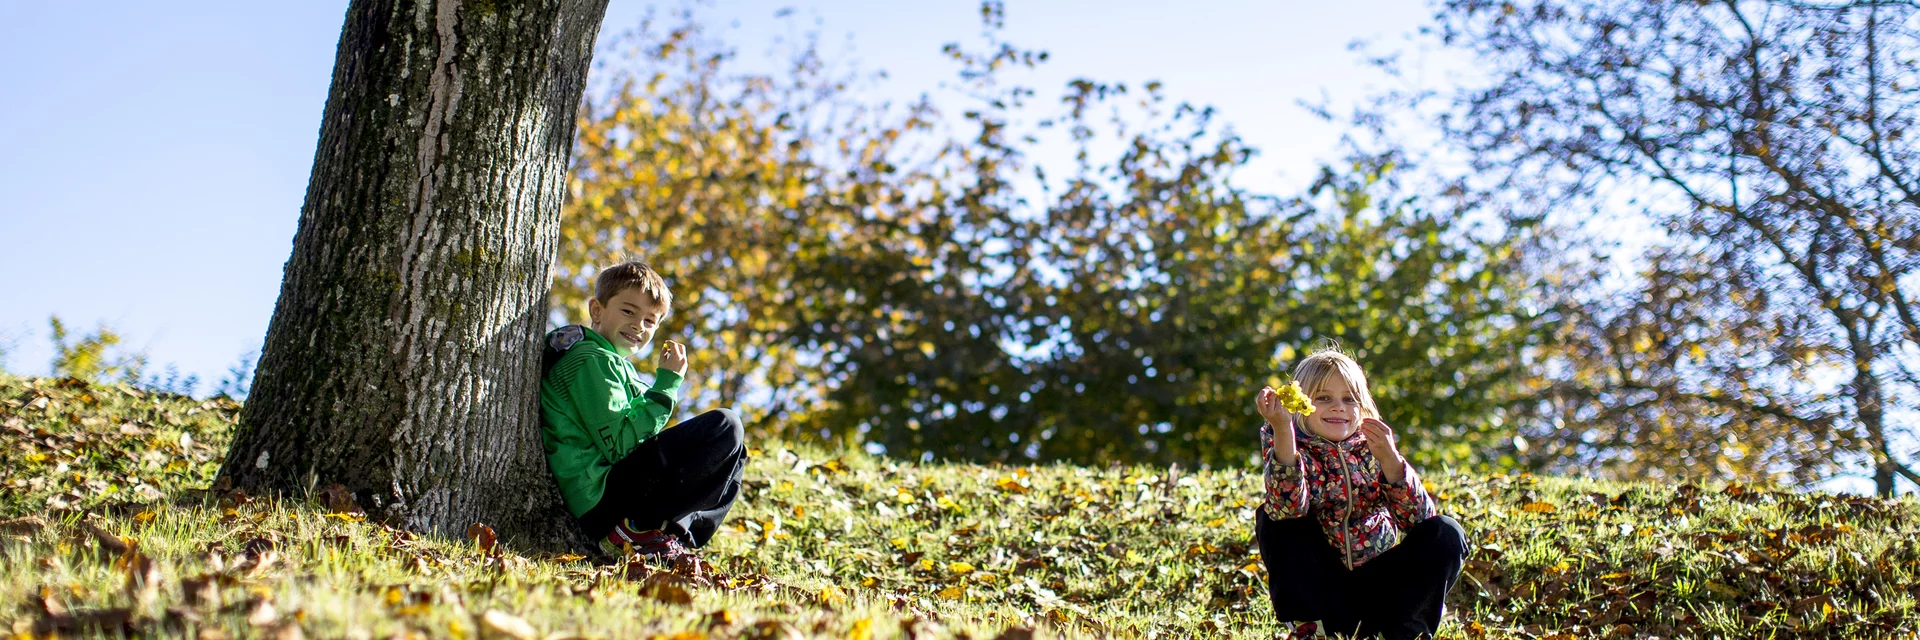 Kinder im Herbst | © STG | Tom Lamm